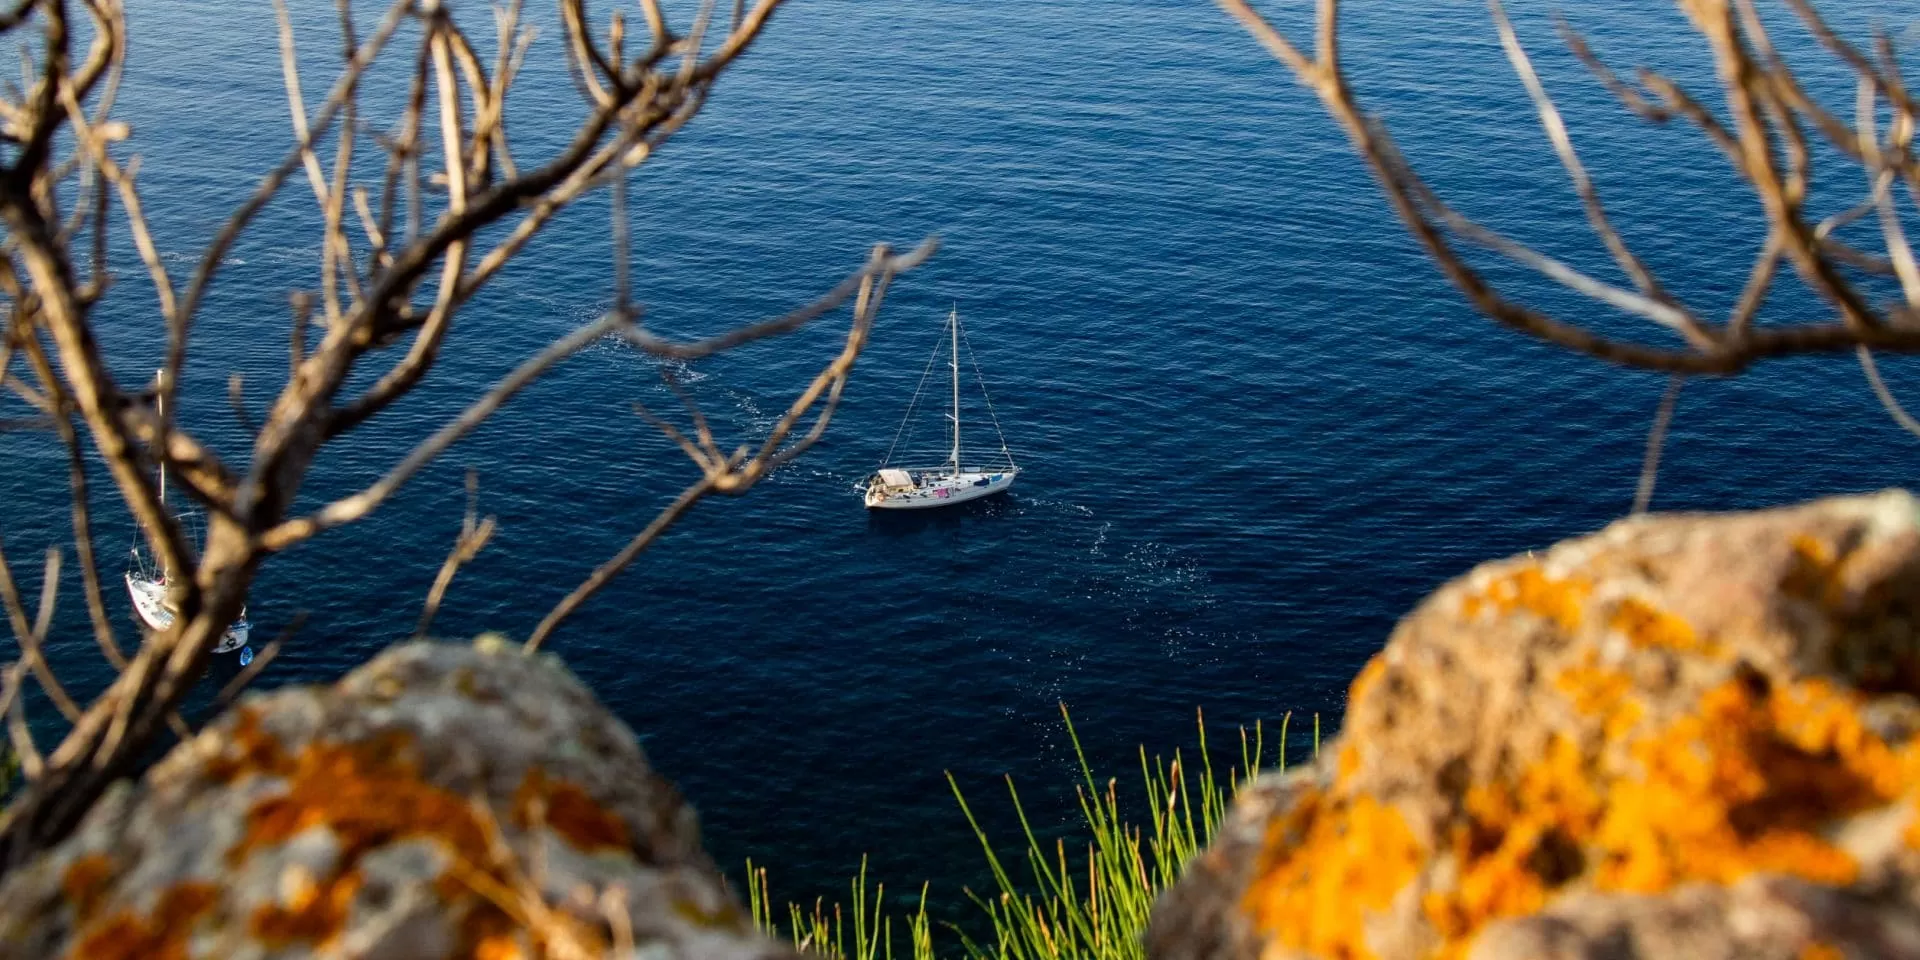 Crociera sub in barca a vela: Isole Eolie